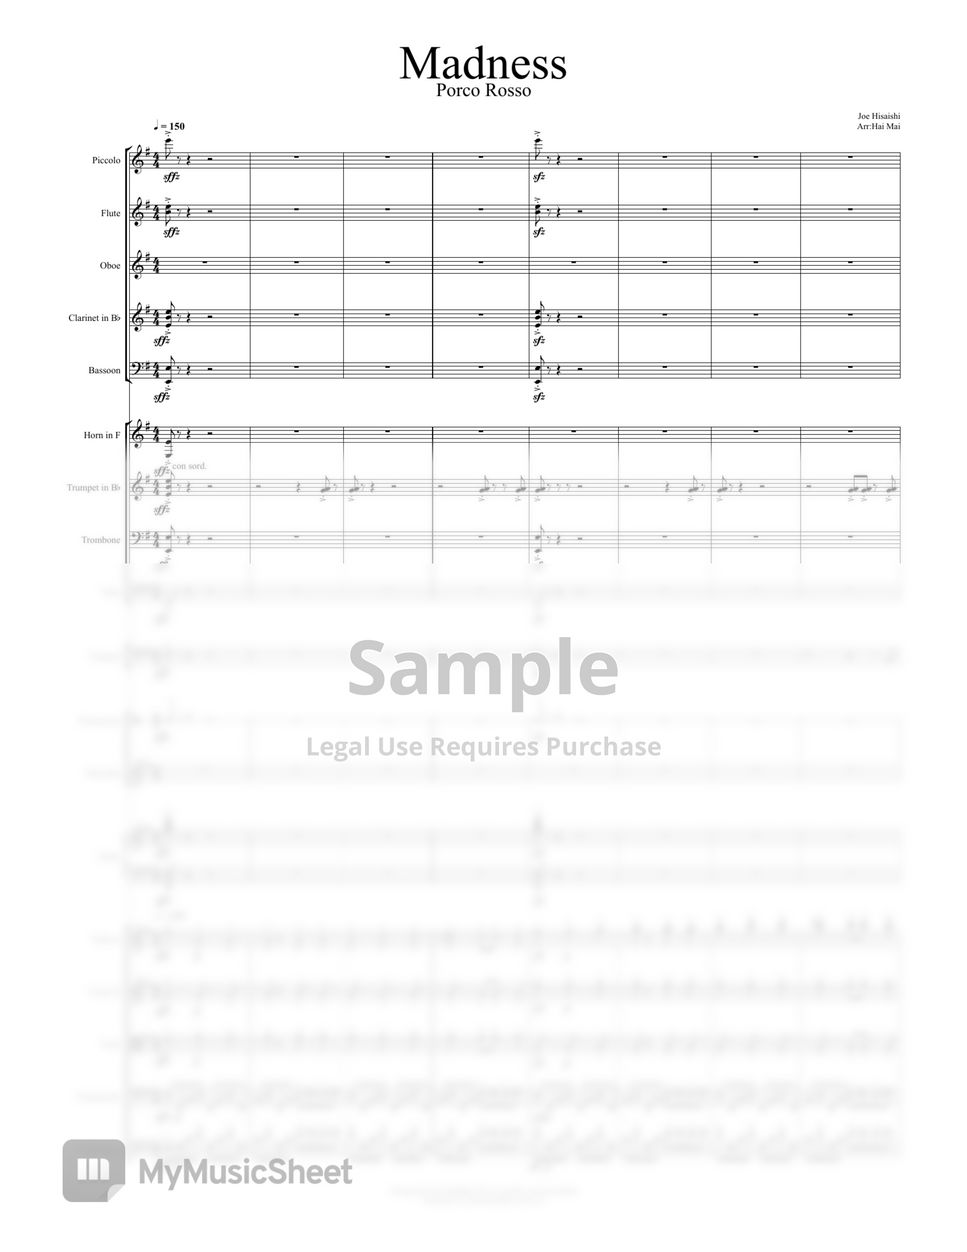 Joe Hisaishi - Madness (Porco Rosso) for Orchestra - Score by Hai Mai